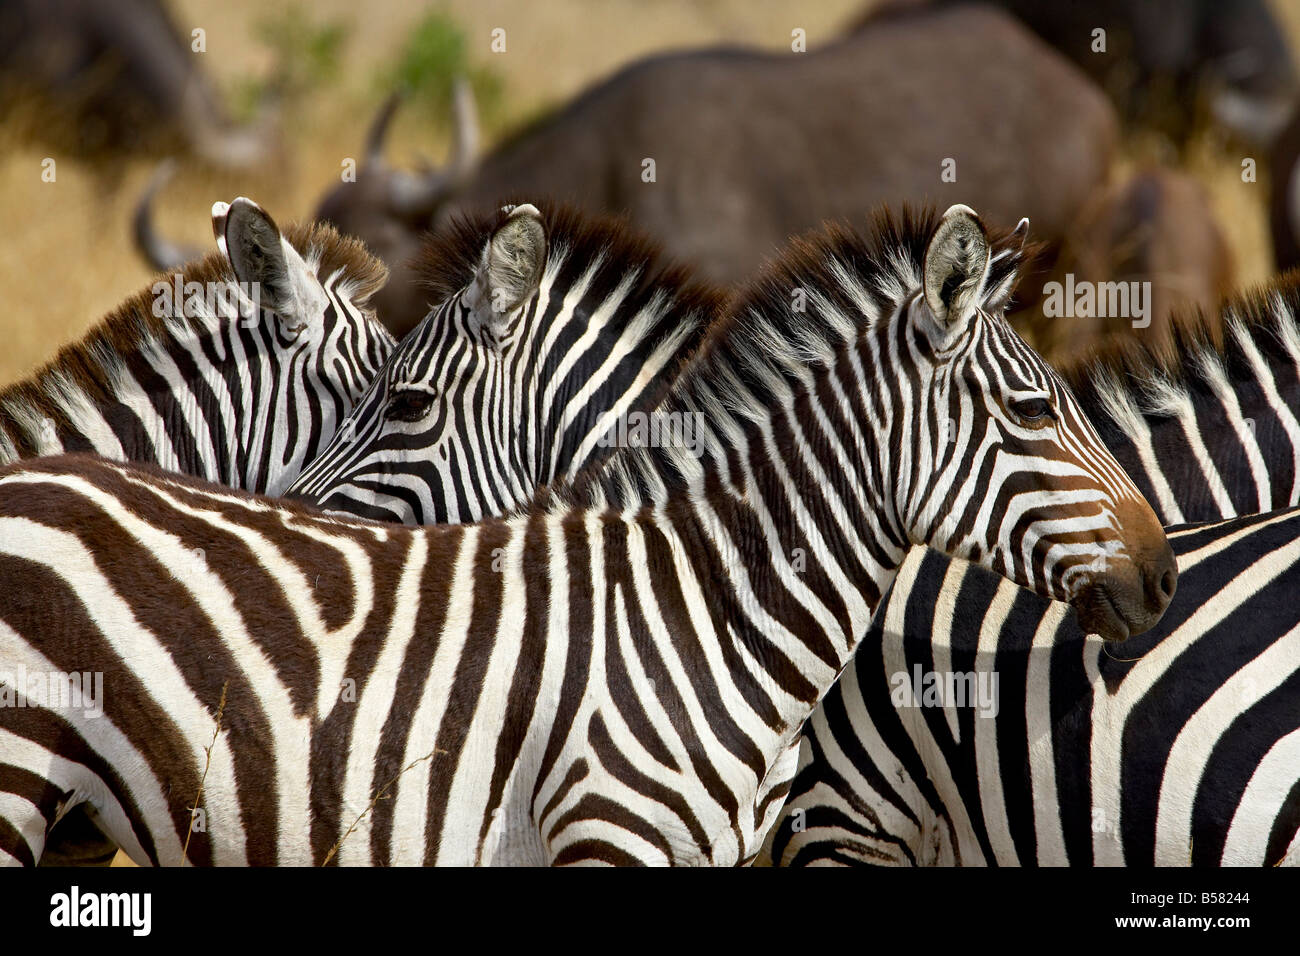 Common zebra (Burchells Stock Photo